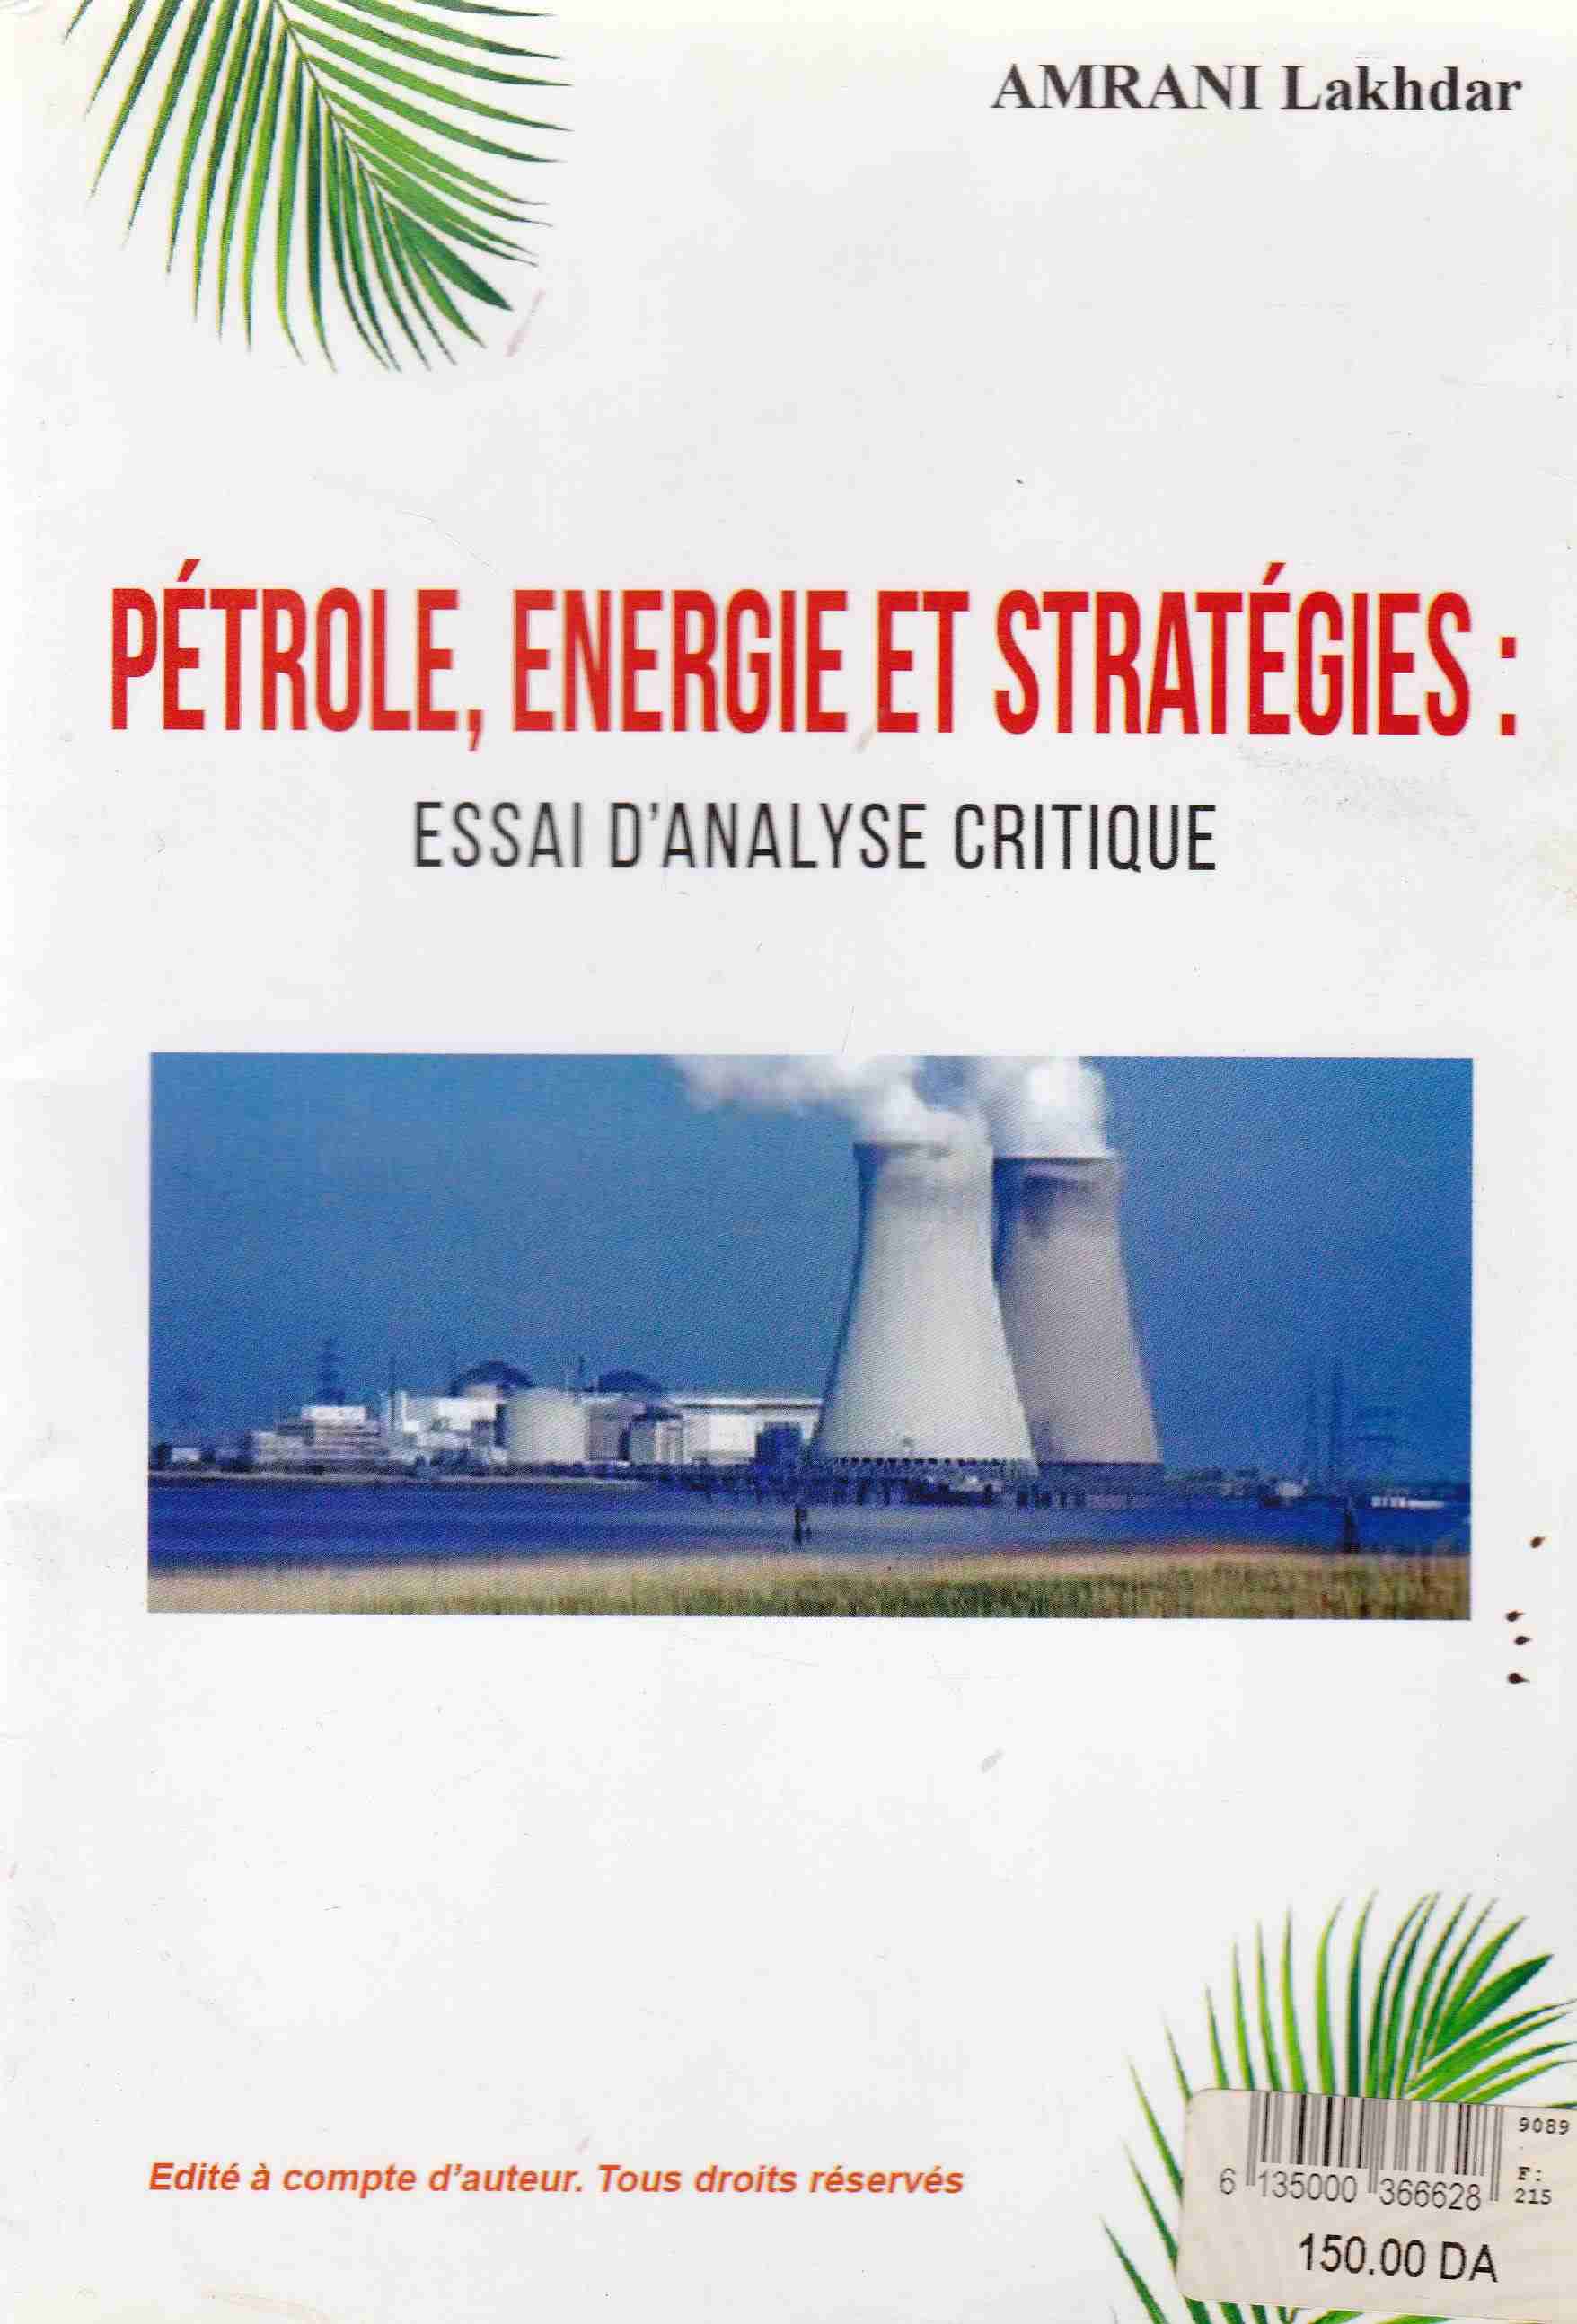 petrole energie et strategies amrani lakhdar